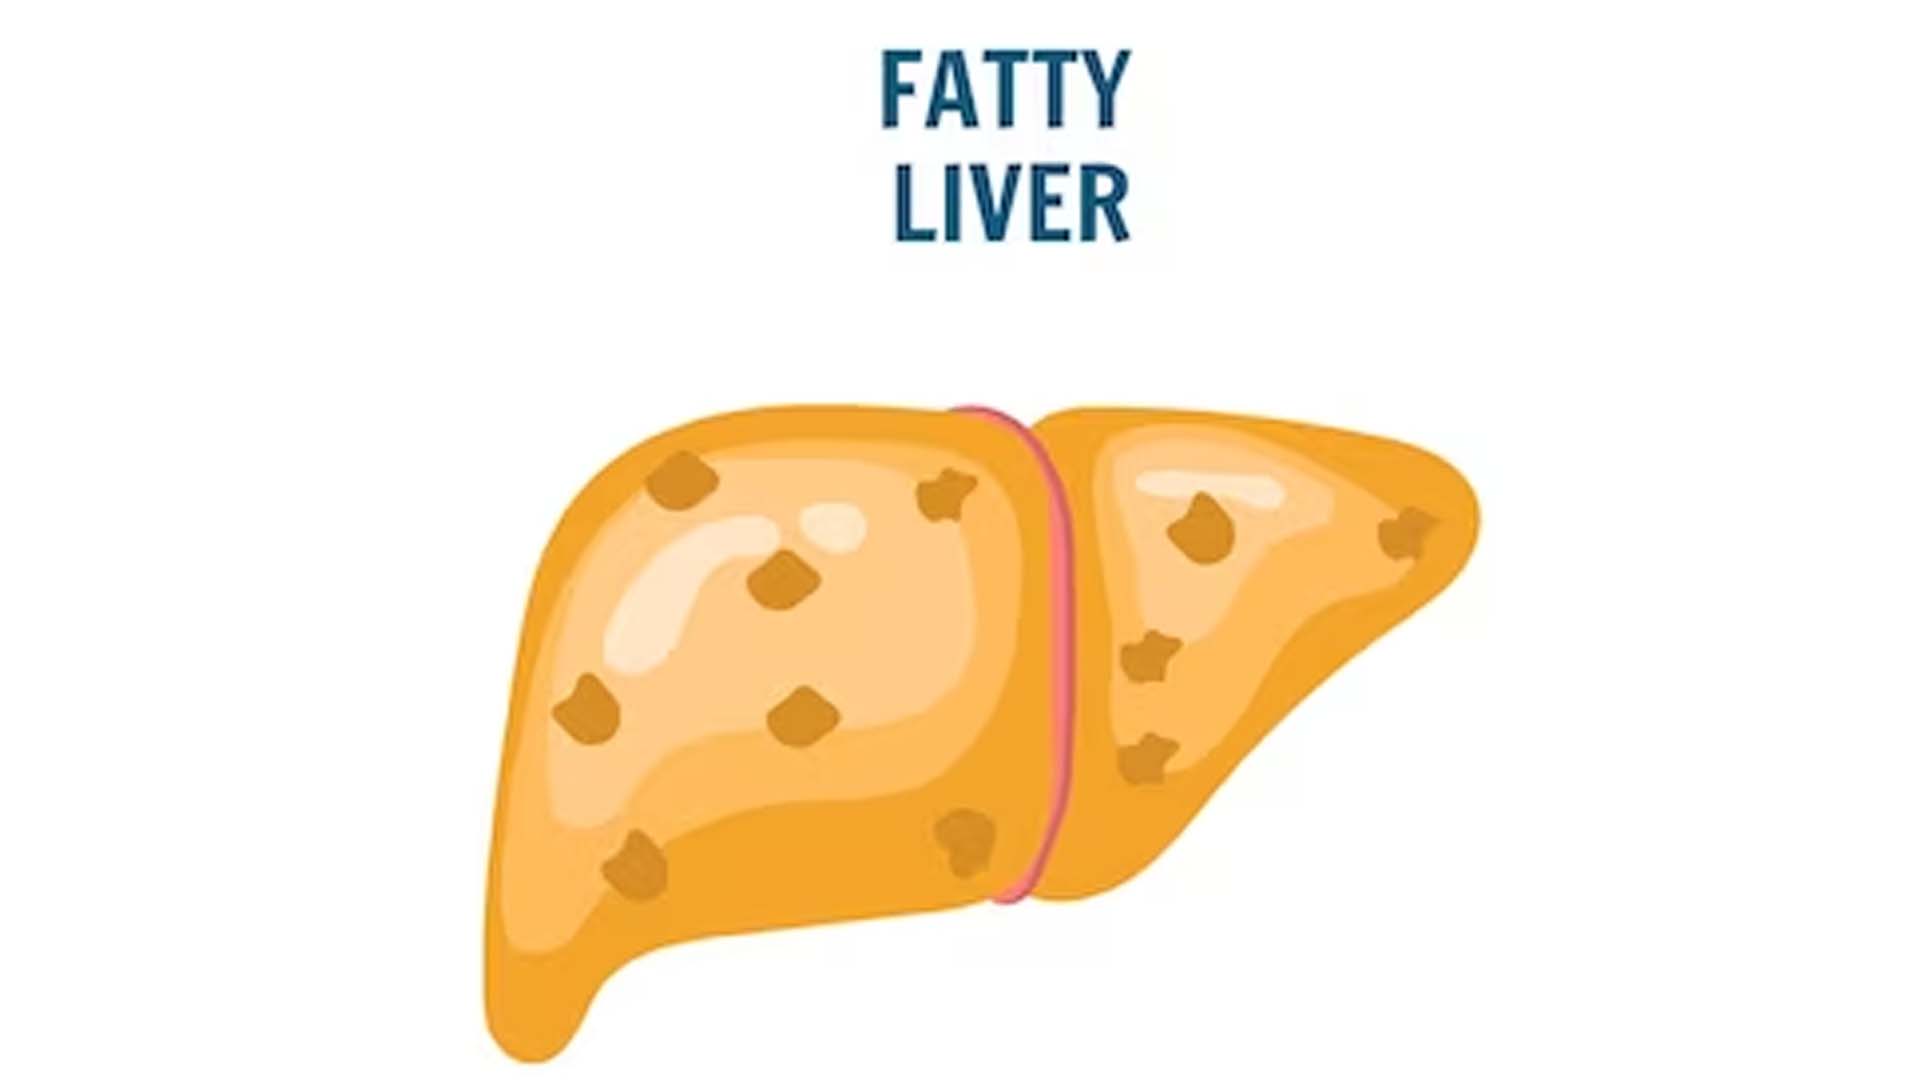 Unhealthy fatty liver in vector illustration